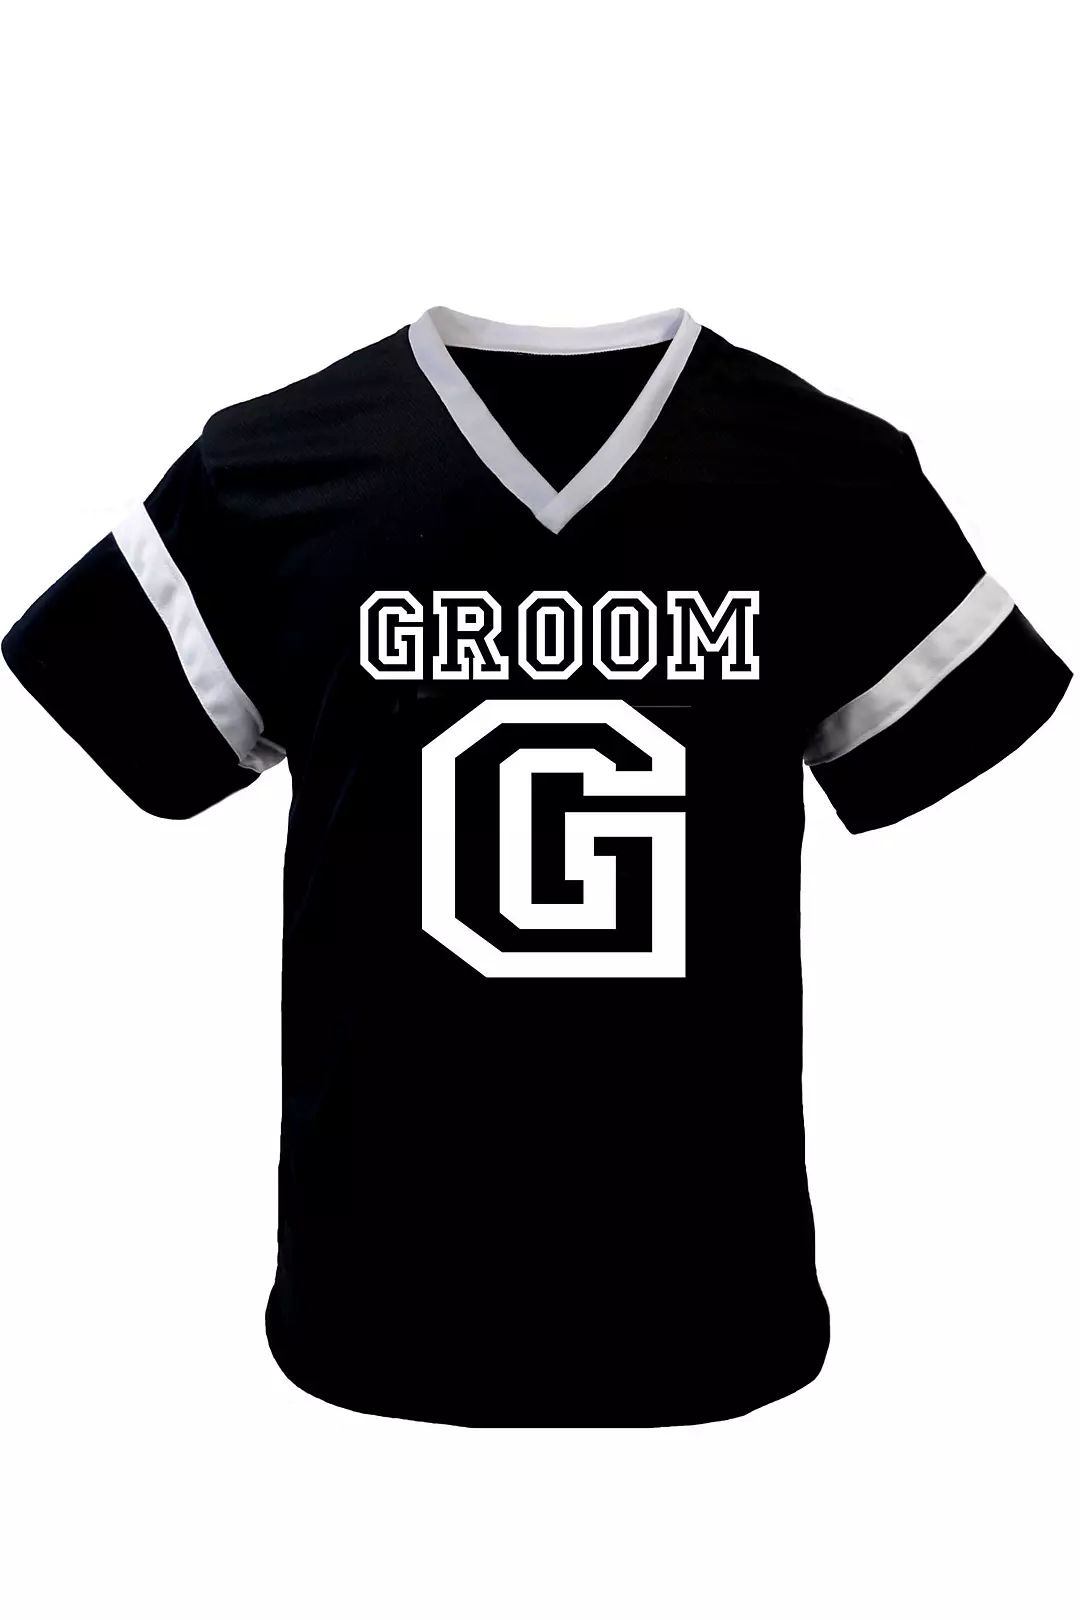 Black Groom Football Jersey Image